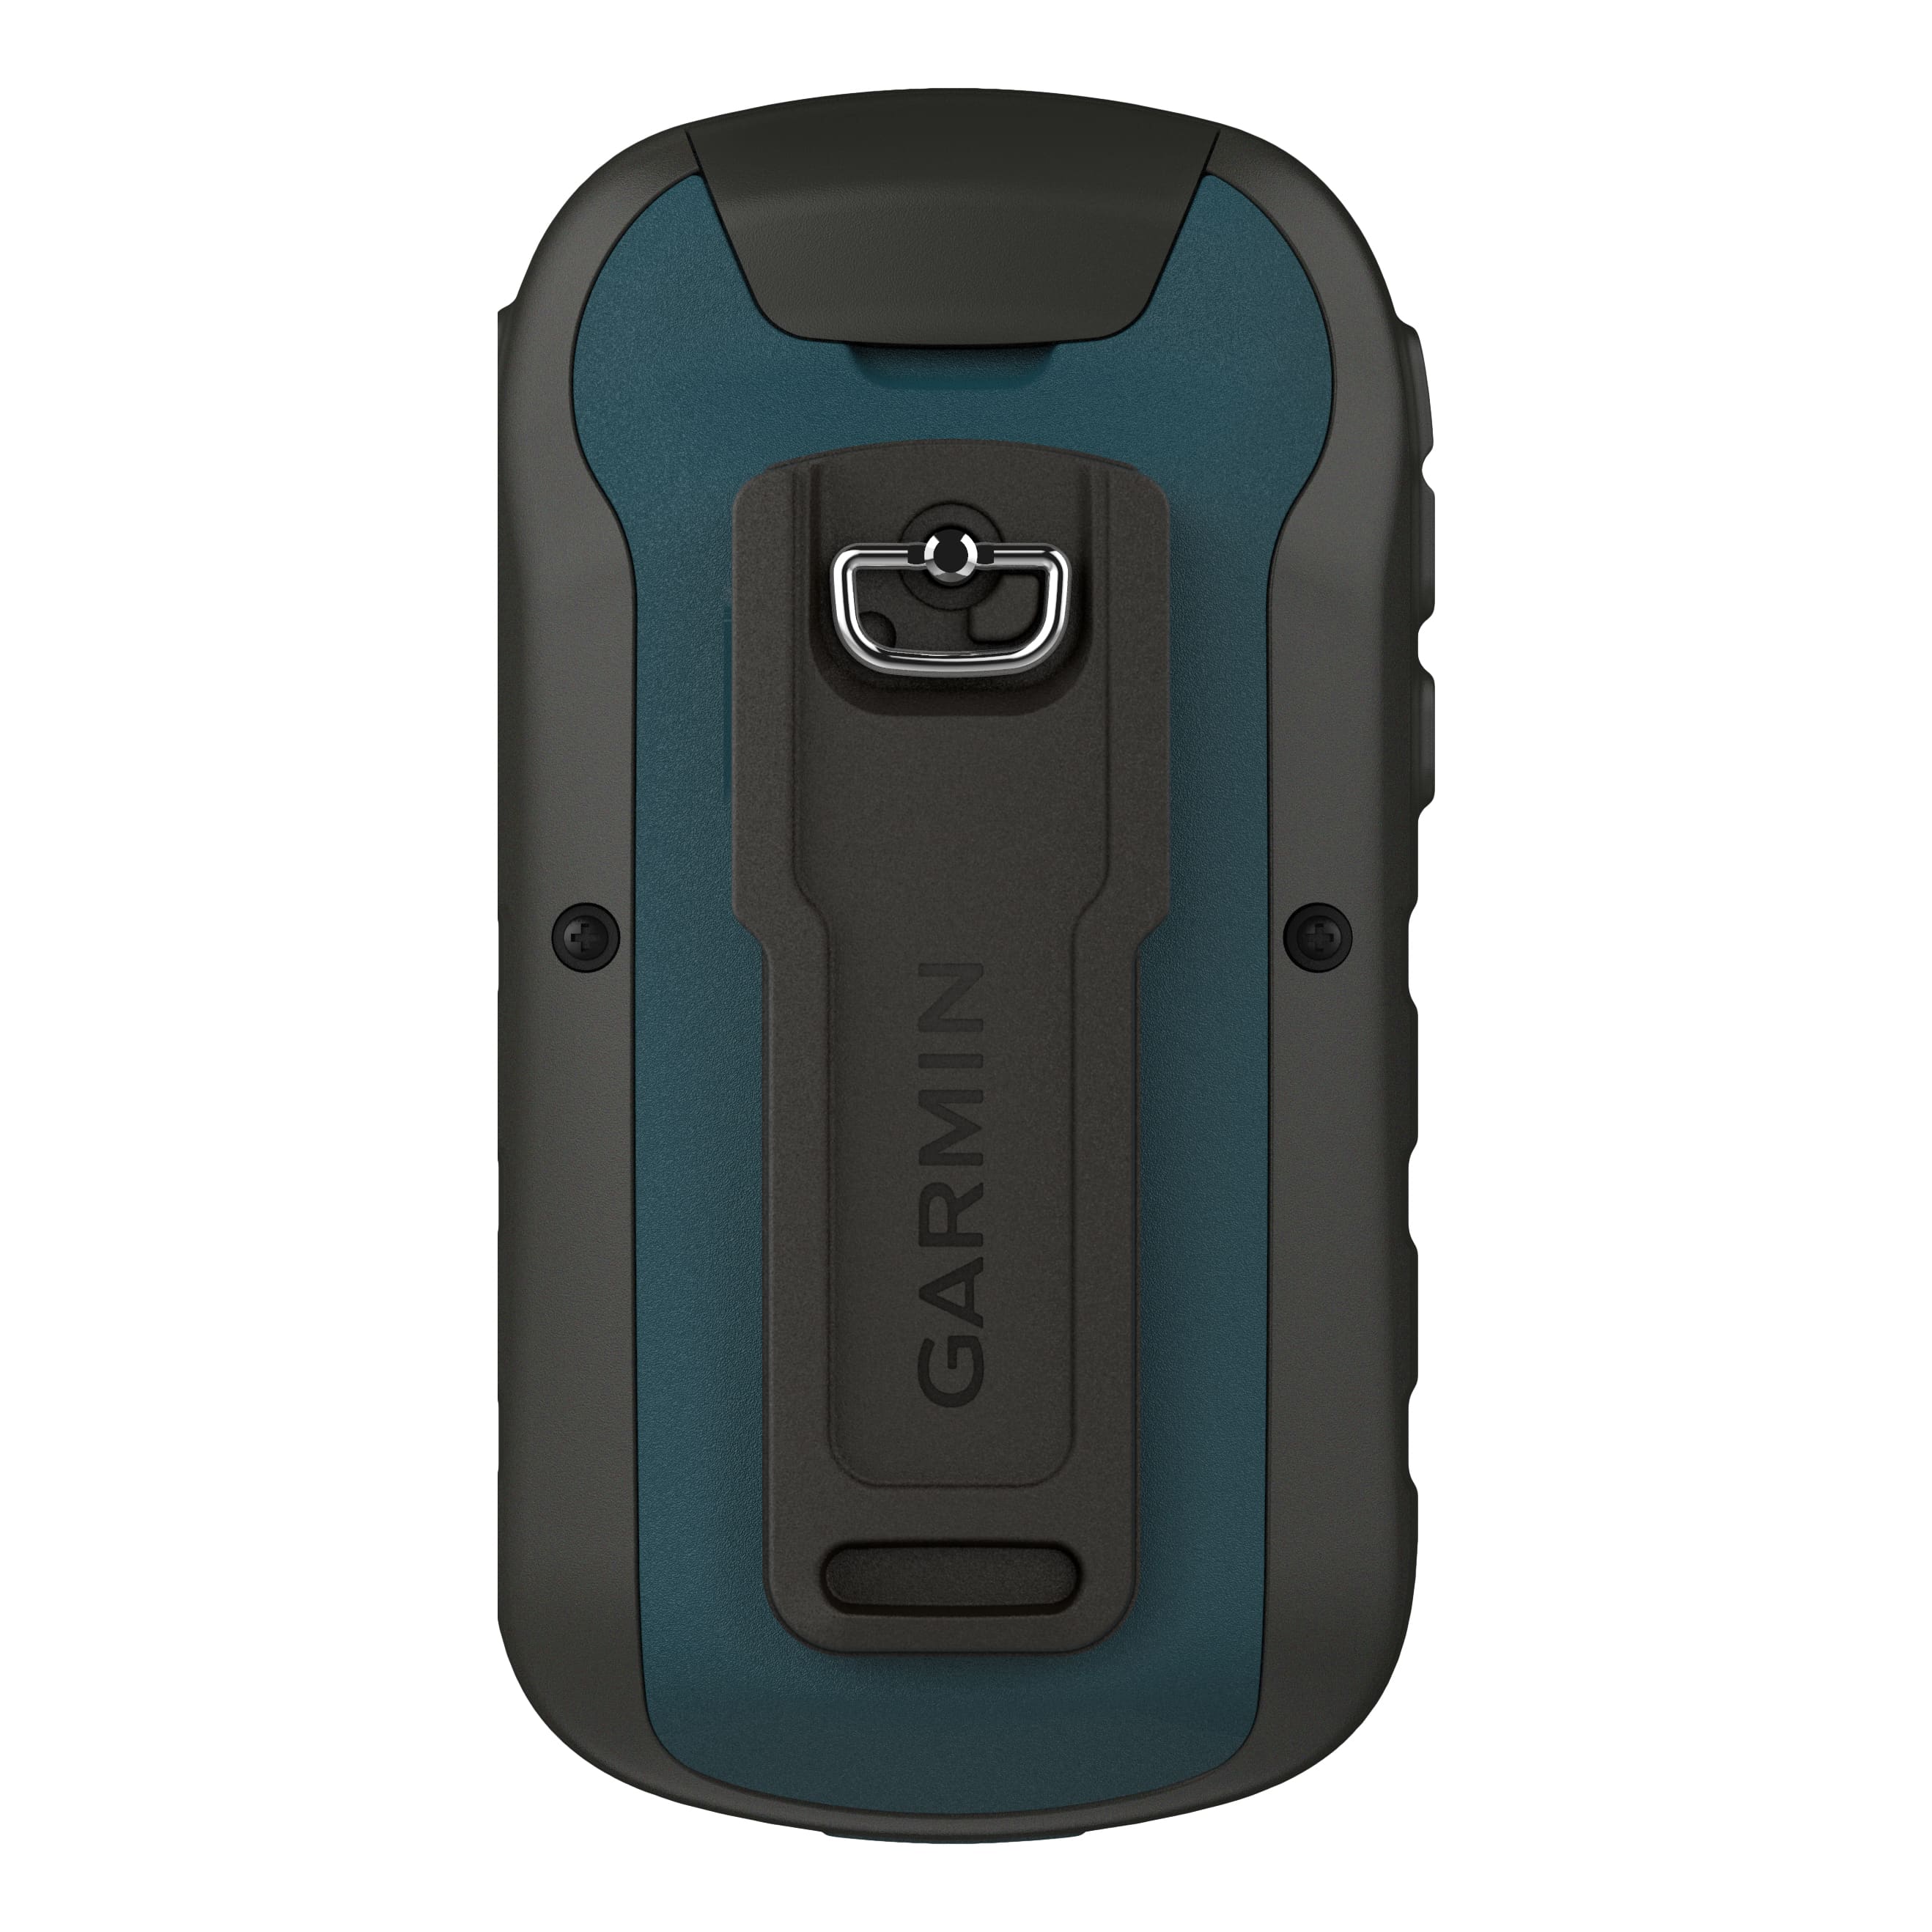 Garmin® eTrex 22x Handheld GPS